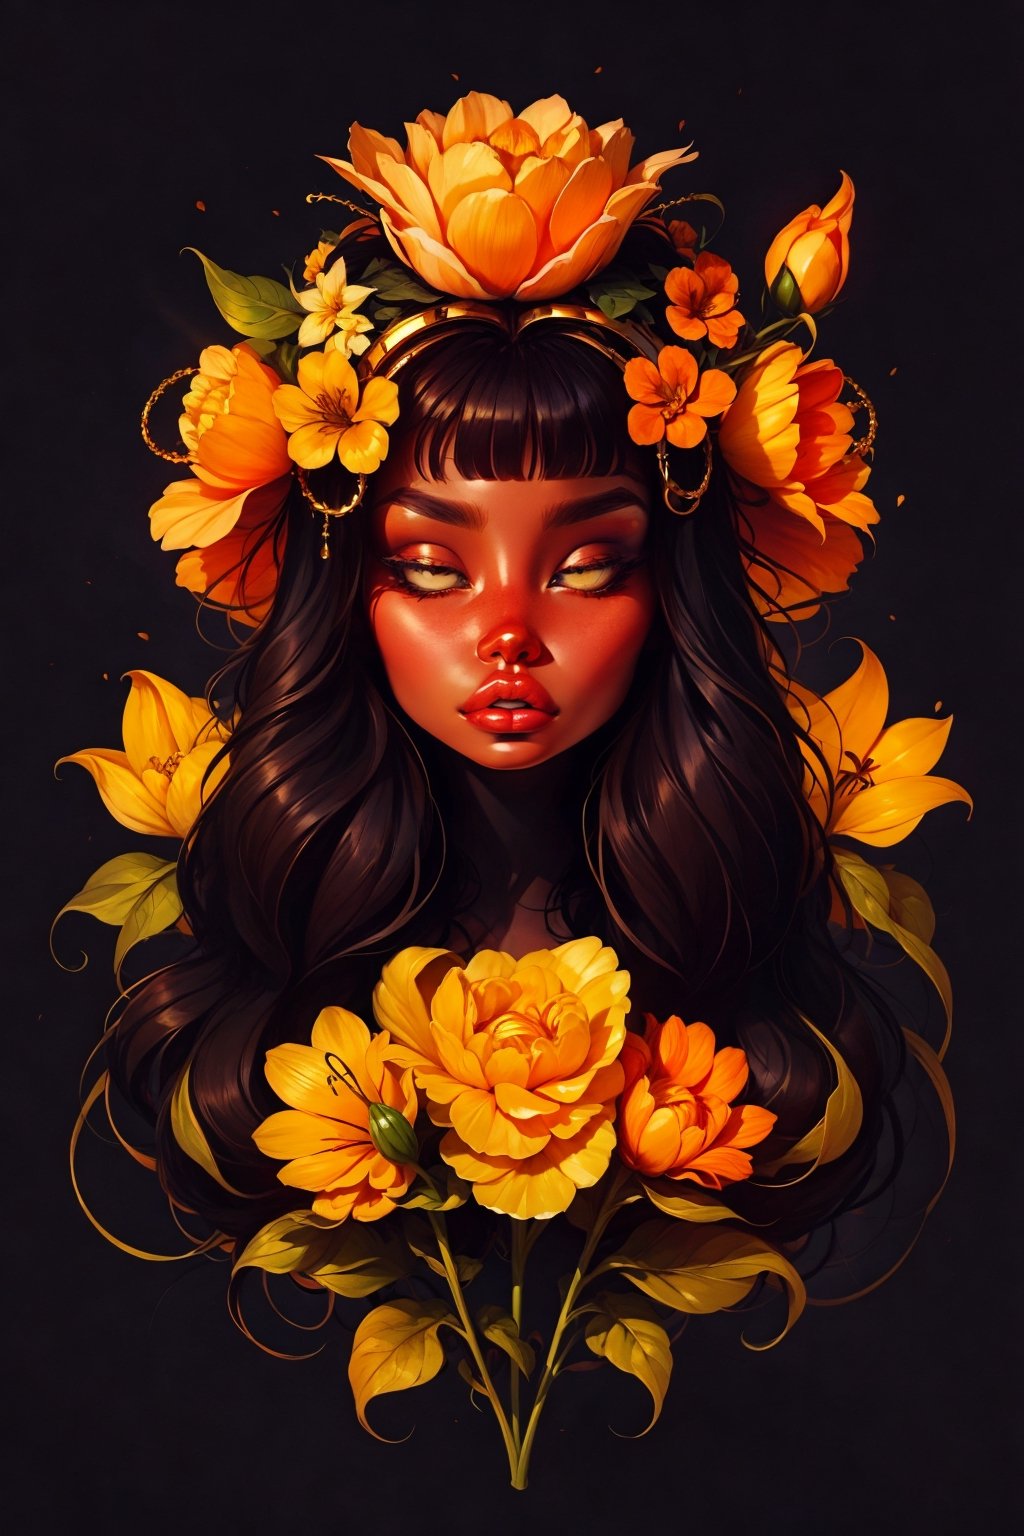 score_9, score_8_up, score_7_up,  beautiful flower, black background, glowing golden petals, extravagant hat    expressiveh,art style